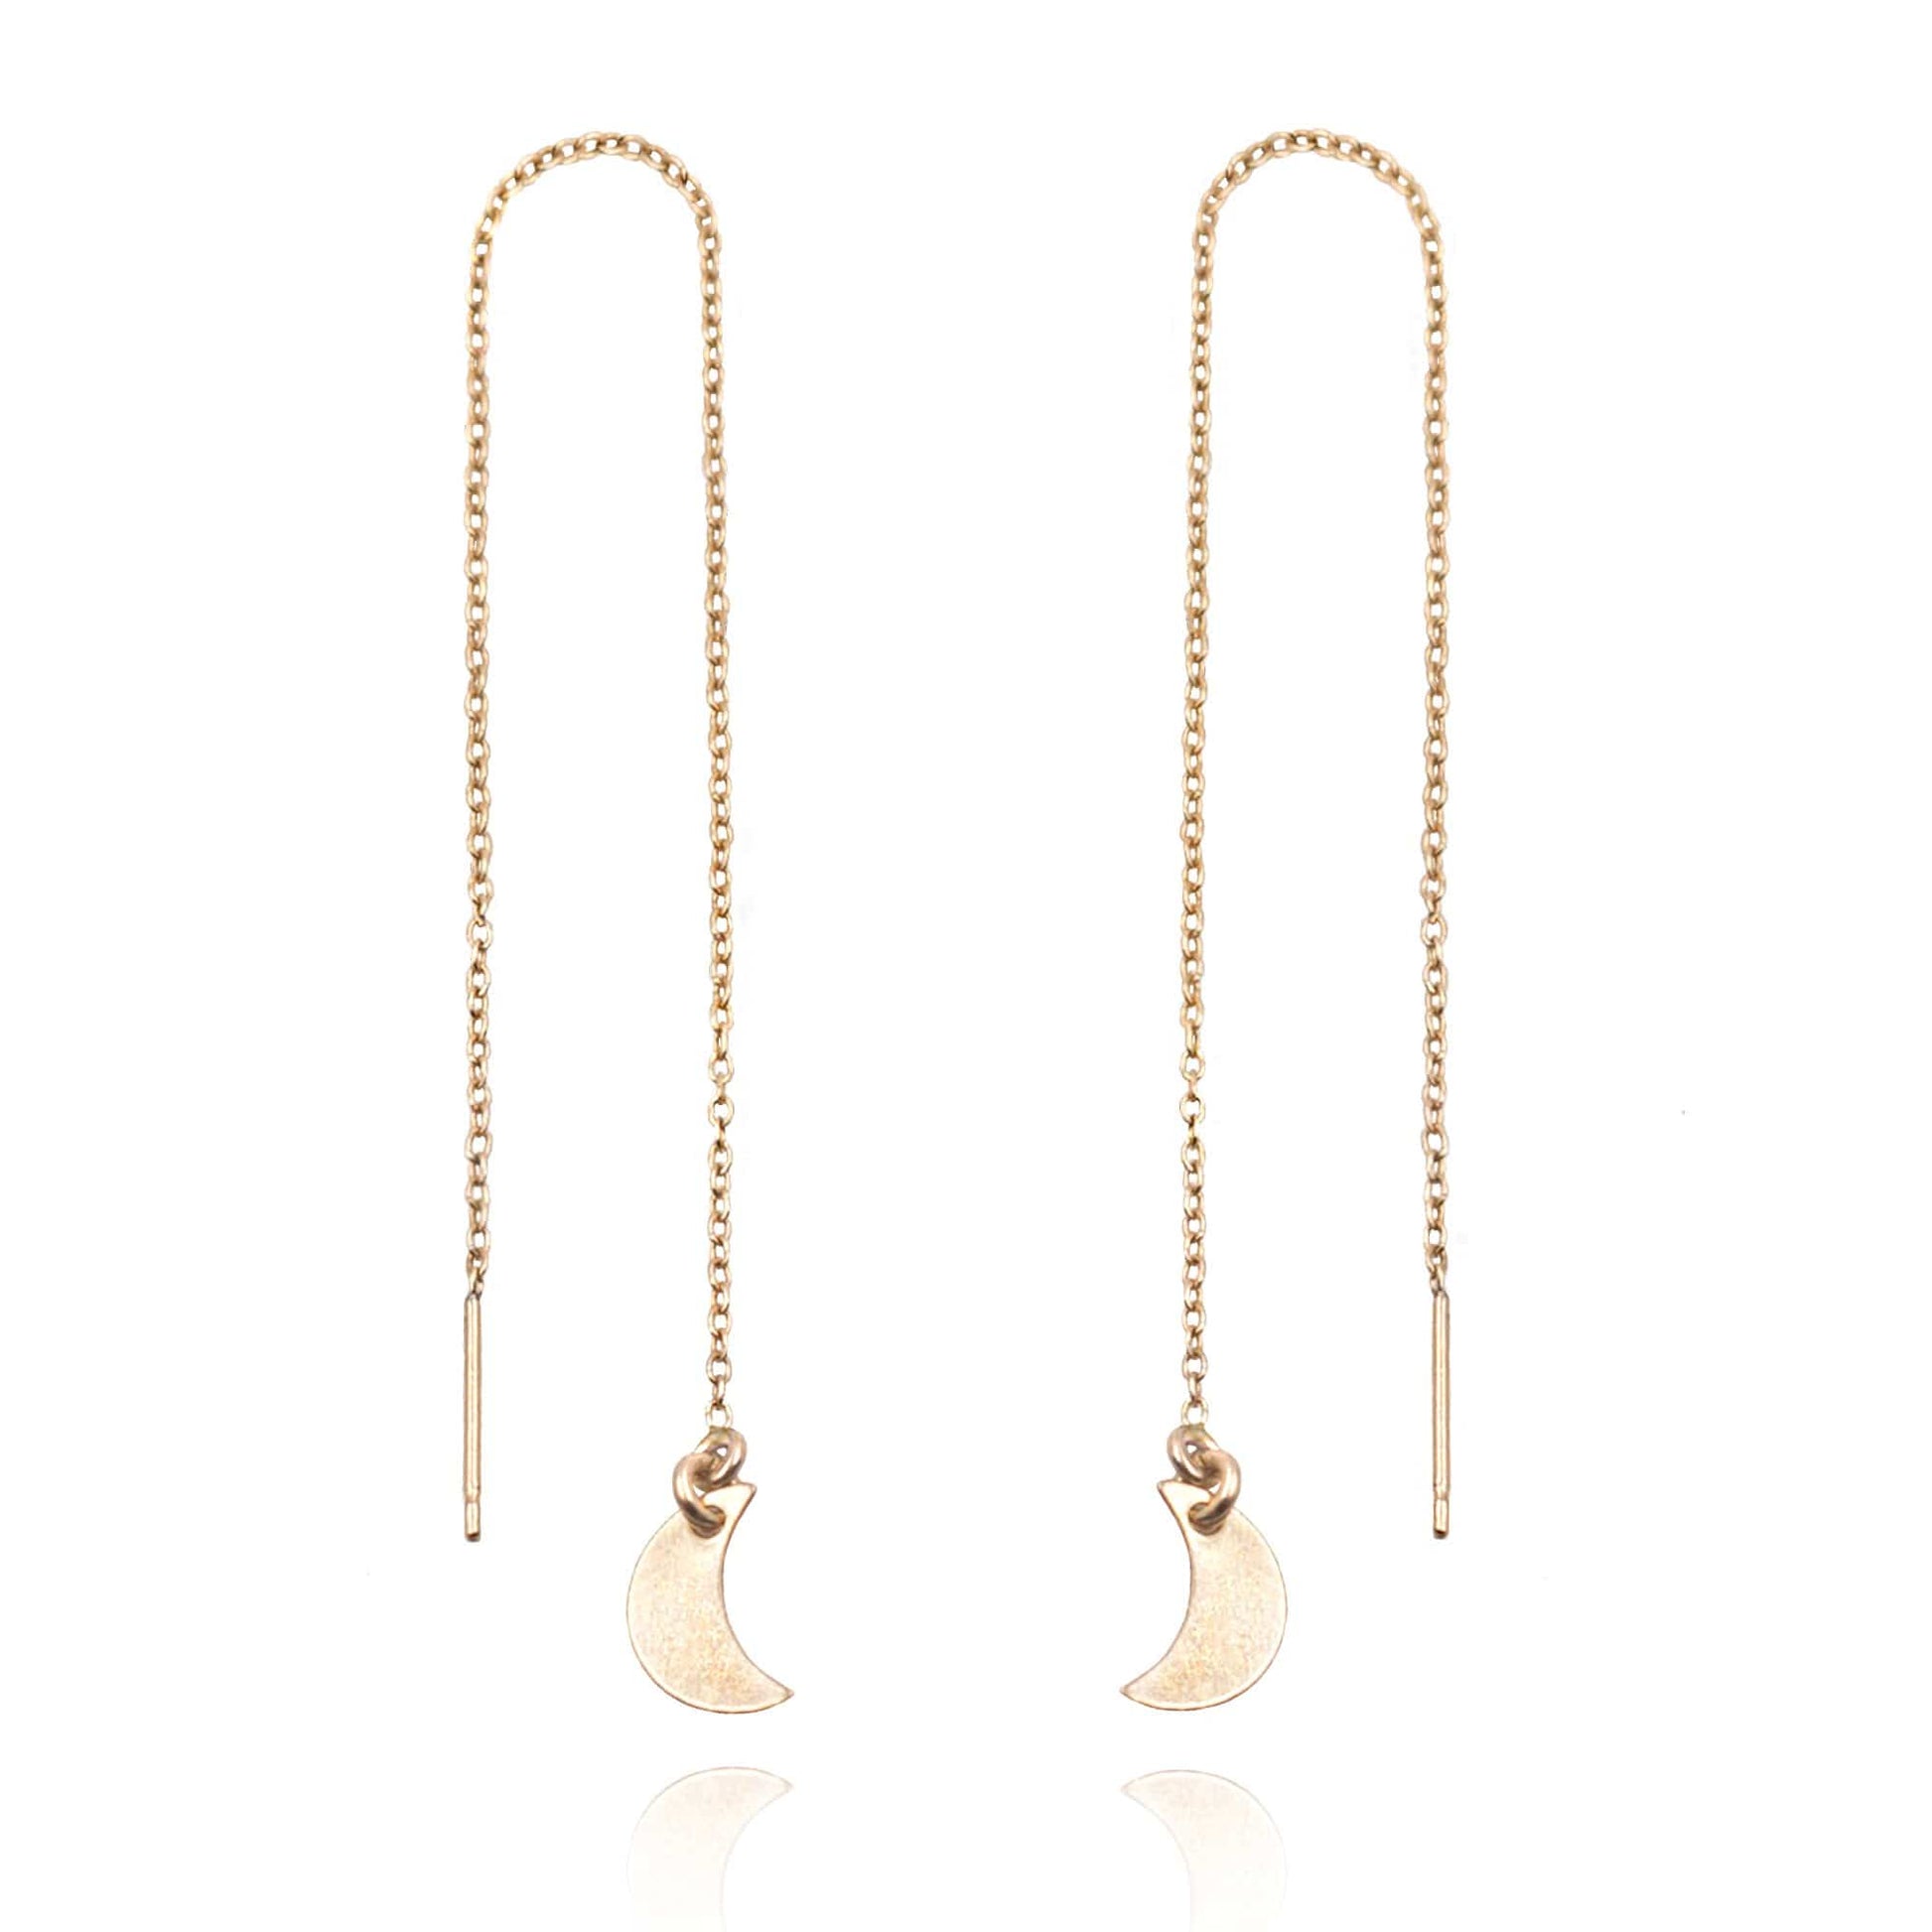 Crescent Moon Threader Earrings Dainty Earrings 14k Gold Filled MaeMae Jewelry | Ear Threaders | Long Crescent Moon Chain Earrings